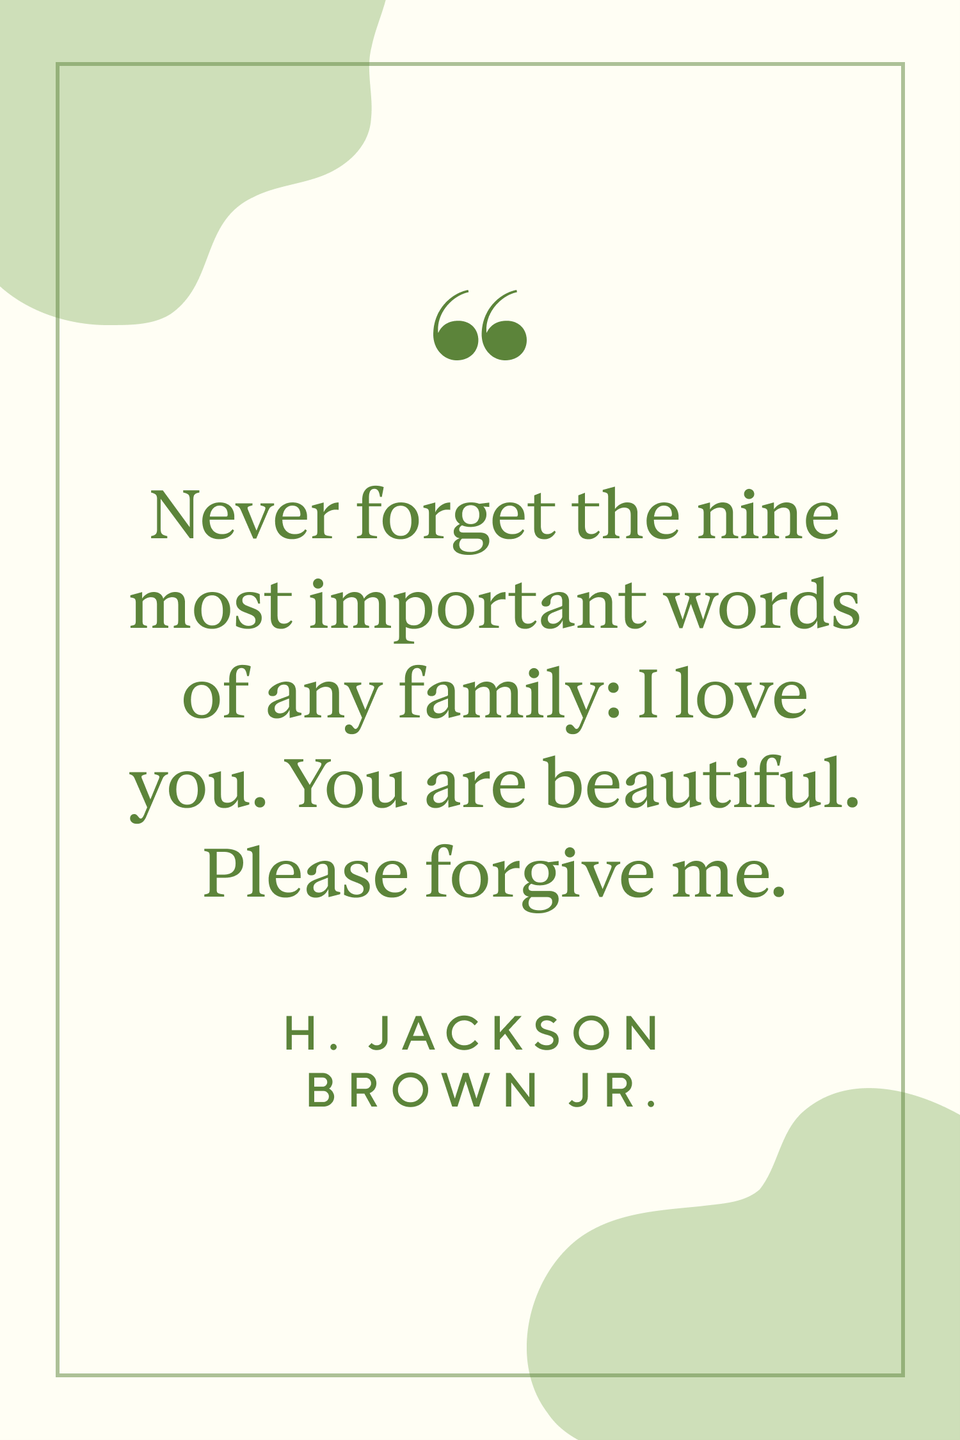 H. Jackson Brown Jr.